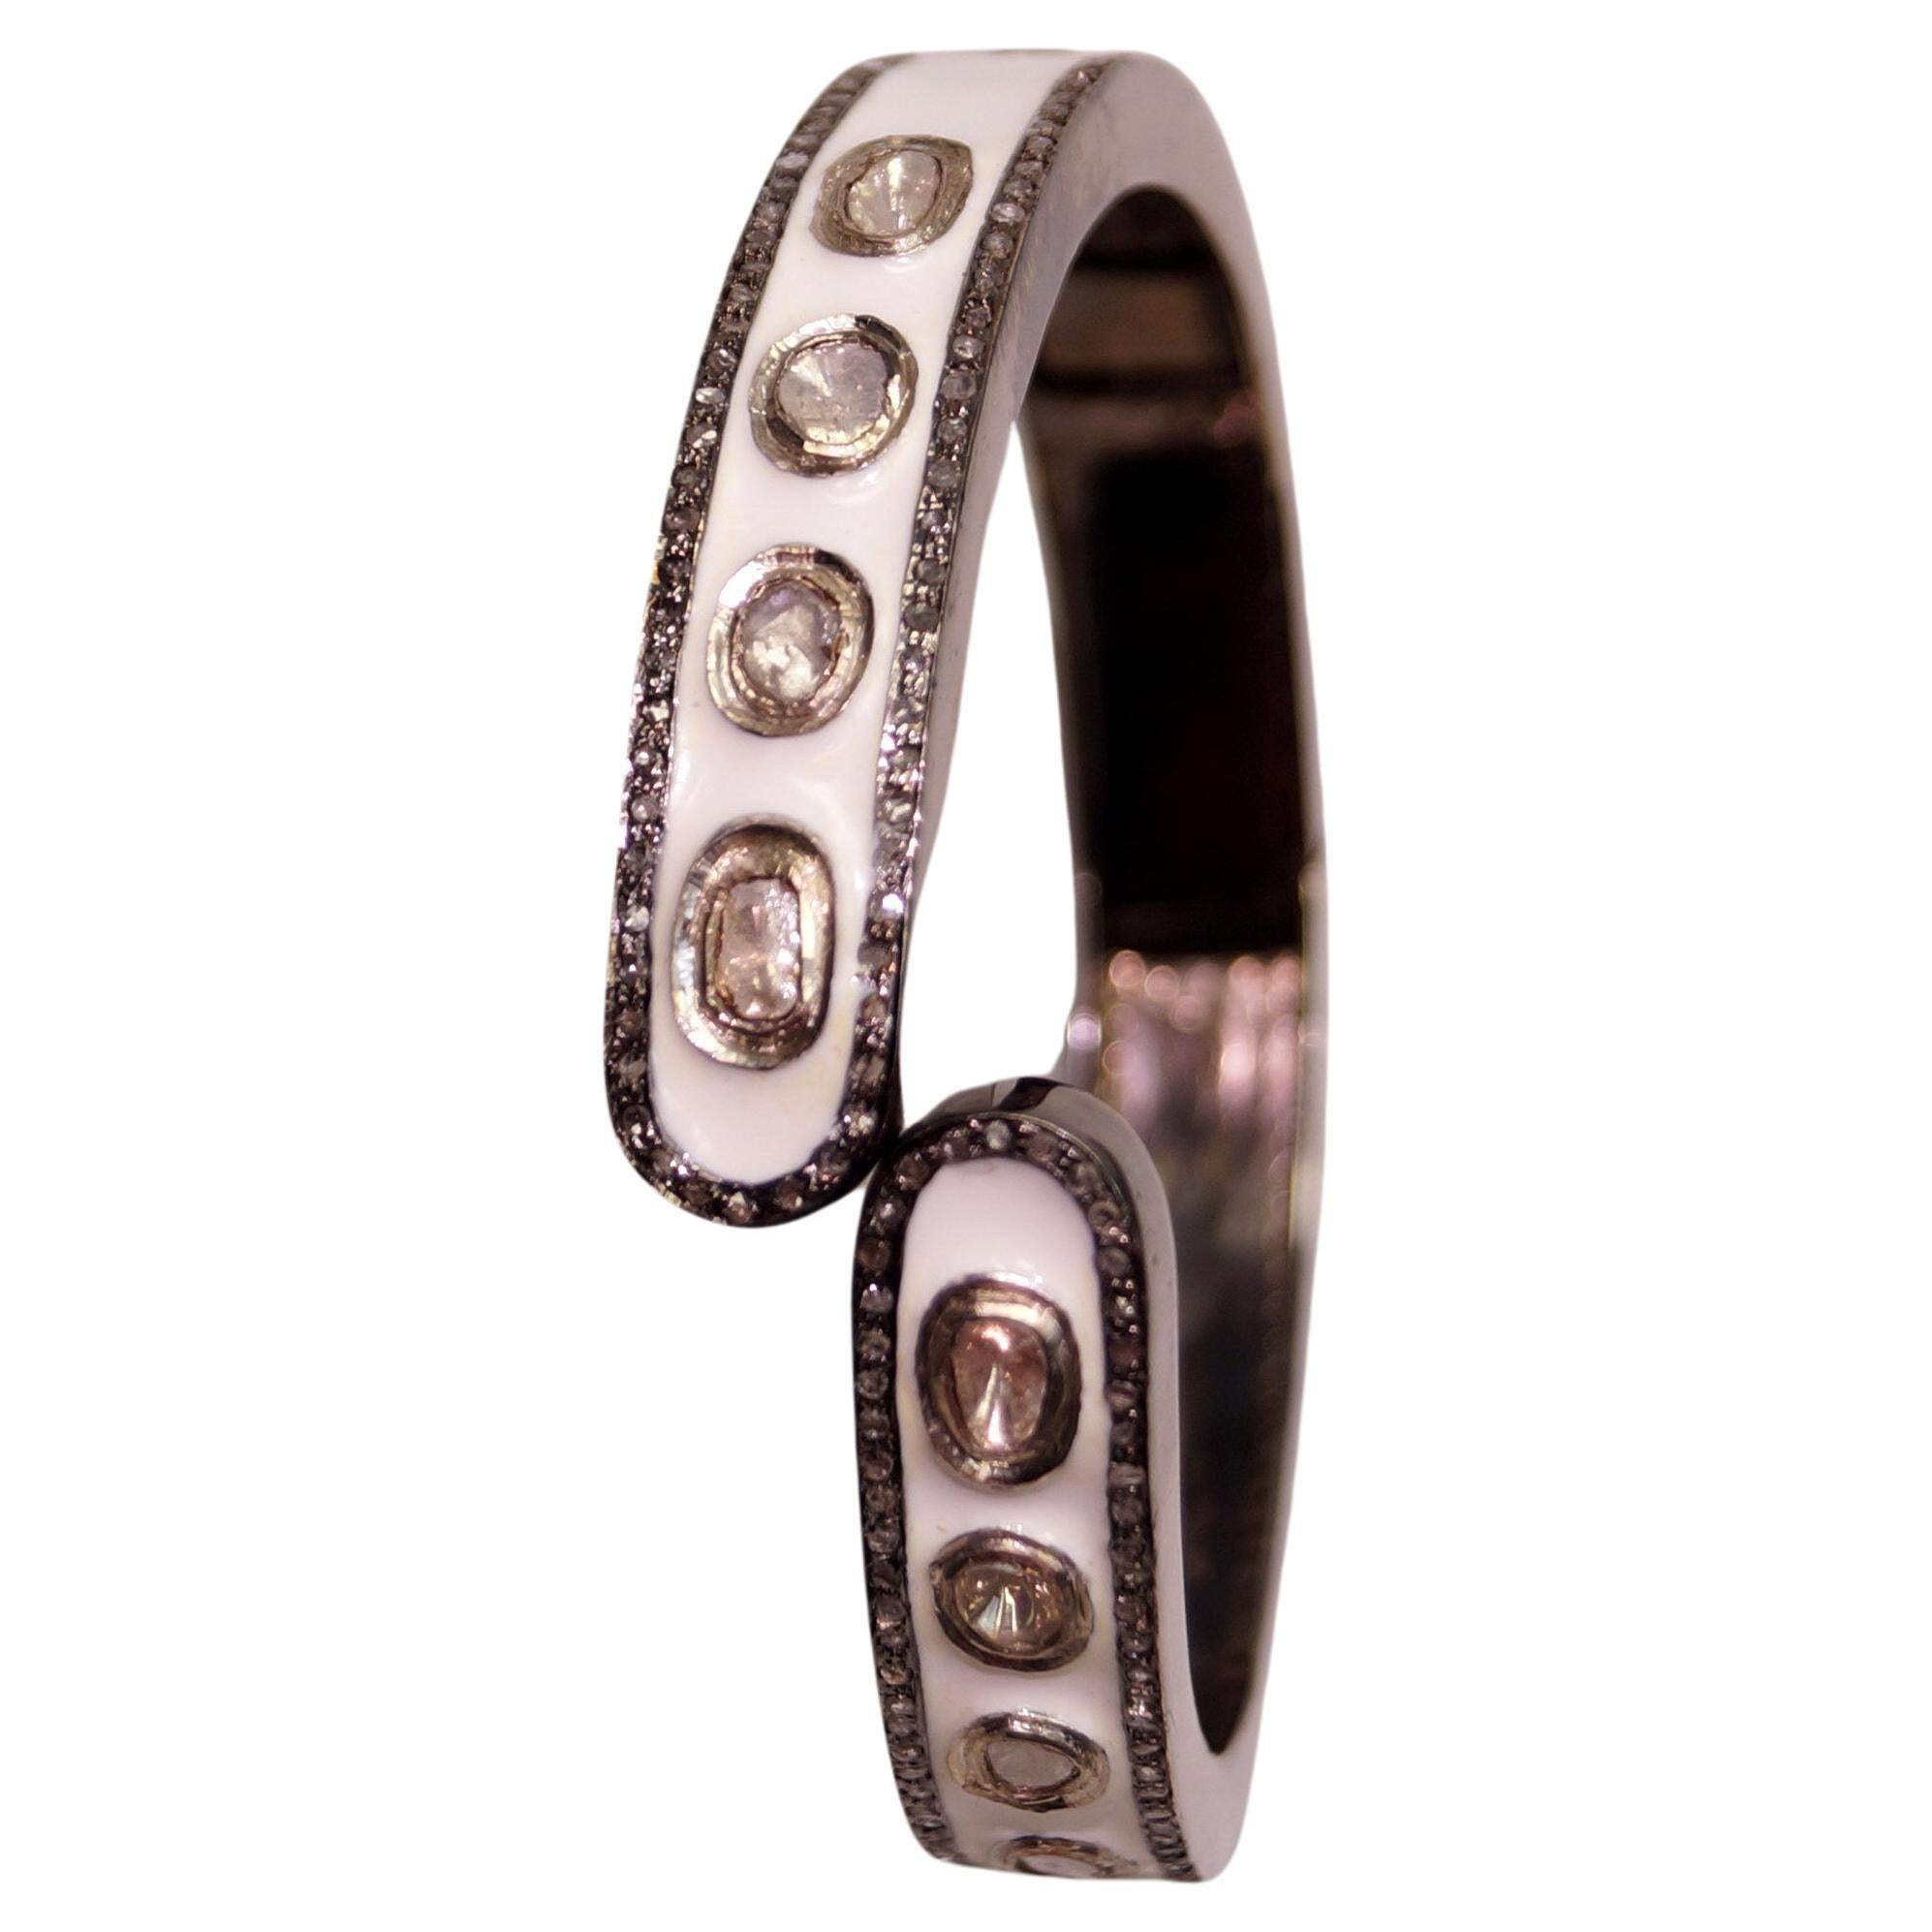 Certified natural uncut Diamonds white enamel sterling silver designer bracelet